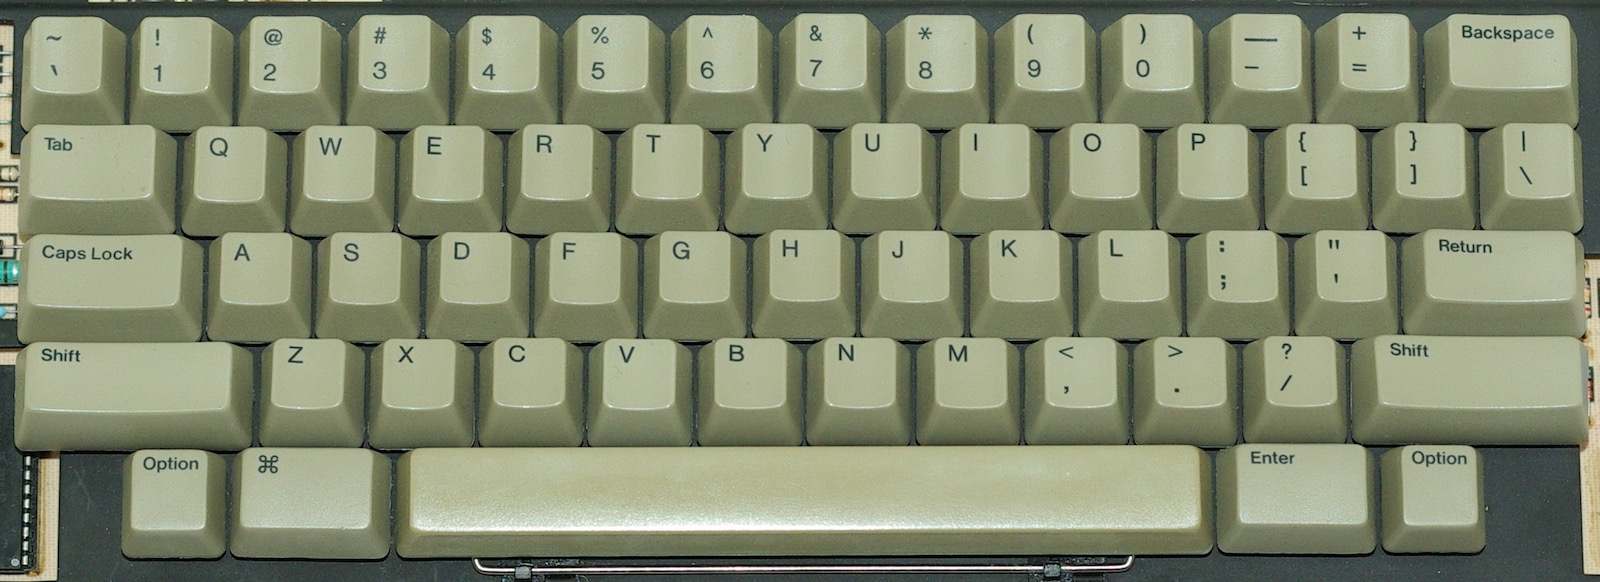 Figure 25: First Mac keyboard. Source: Deskthority.